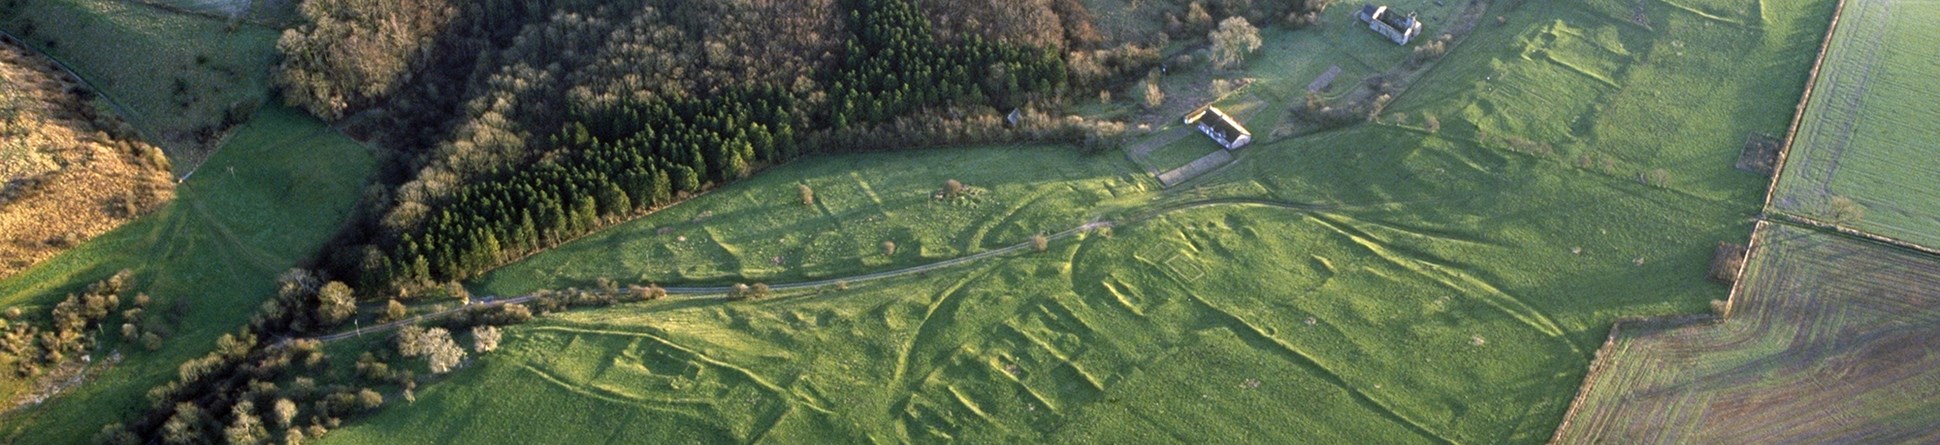 Aerial view of Wharram Percy Medieval Village